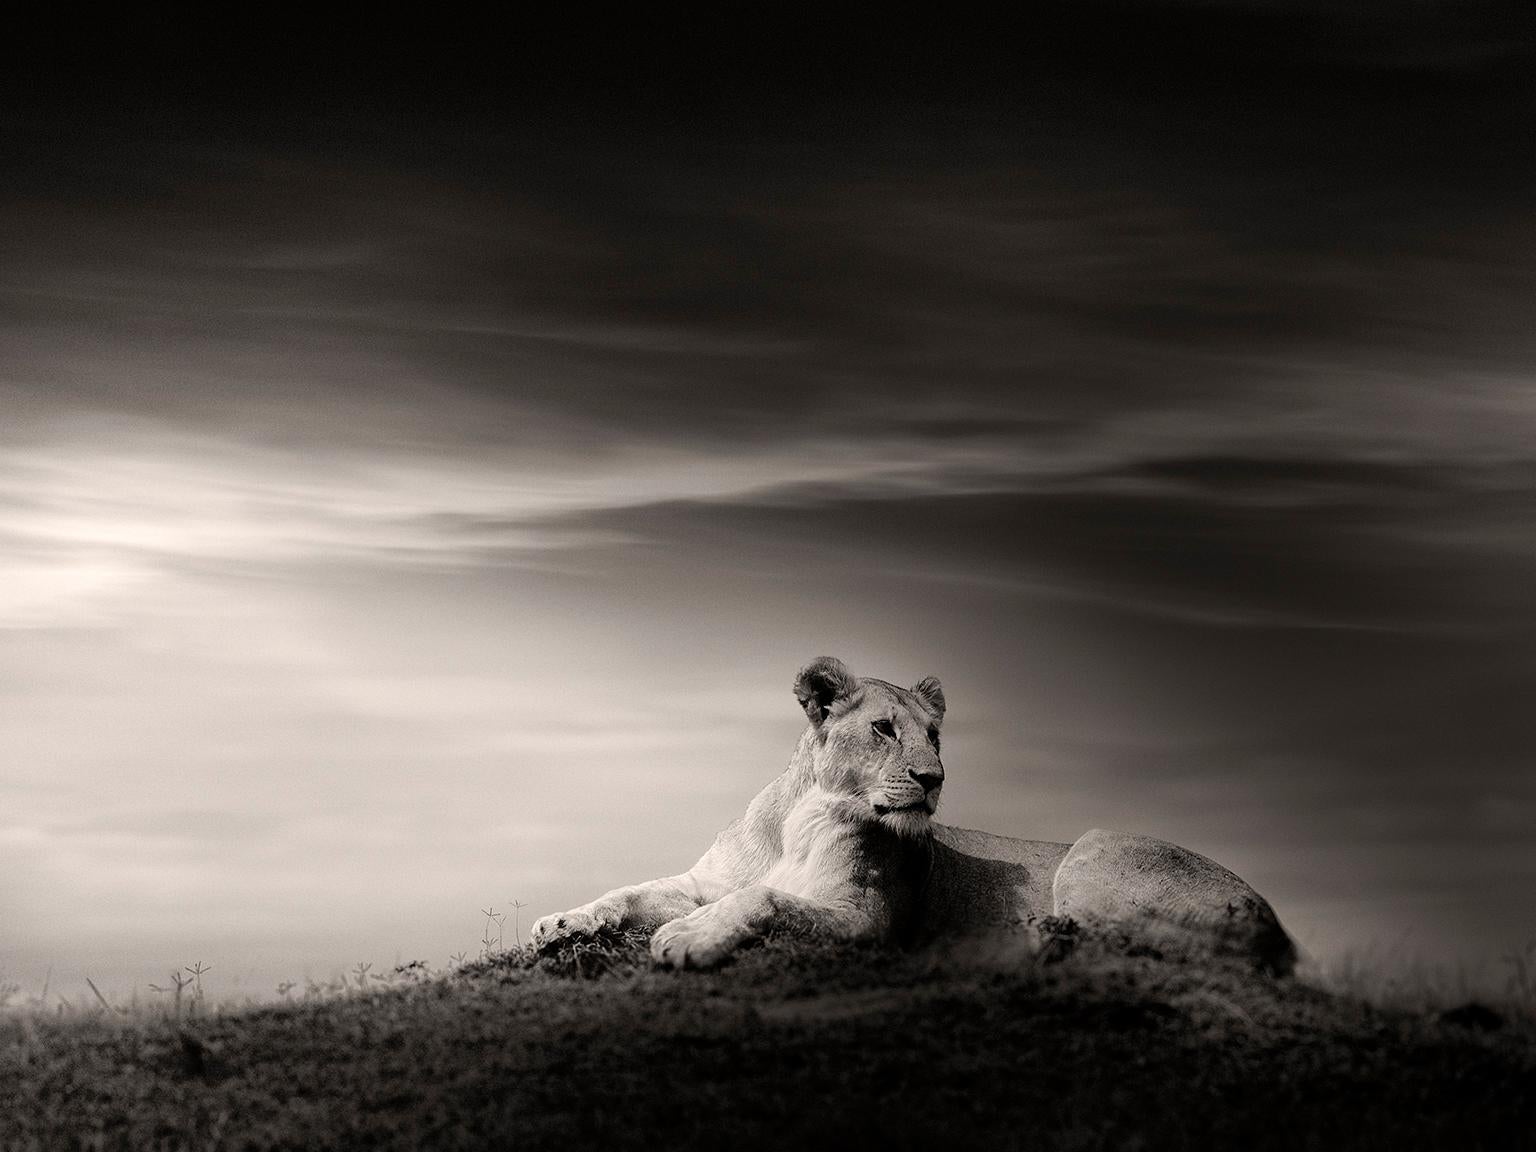 Joachim Schmeisser Portrait Photograph - The Lioness, Lion, black and white photography, Africa, Portrait, Wildlife